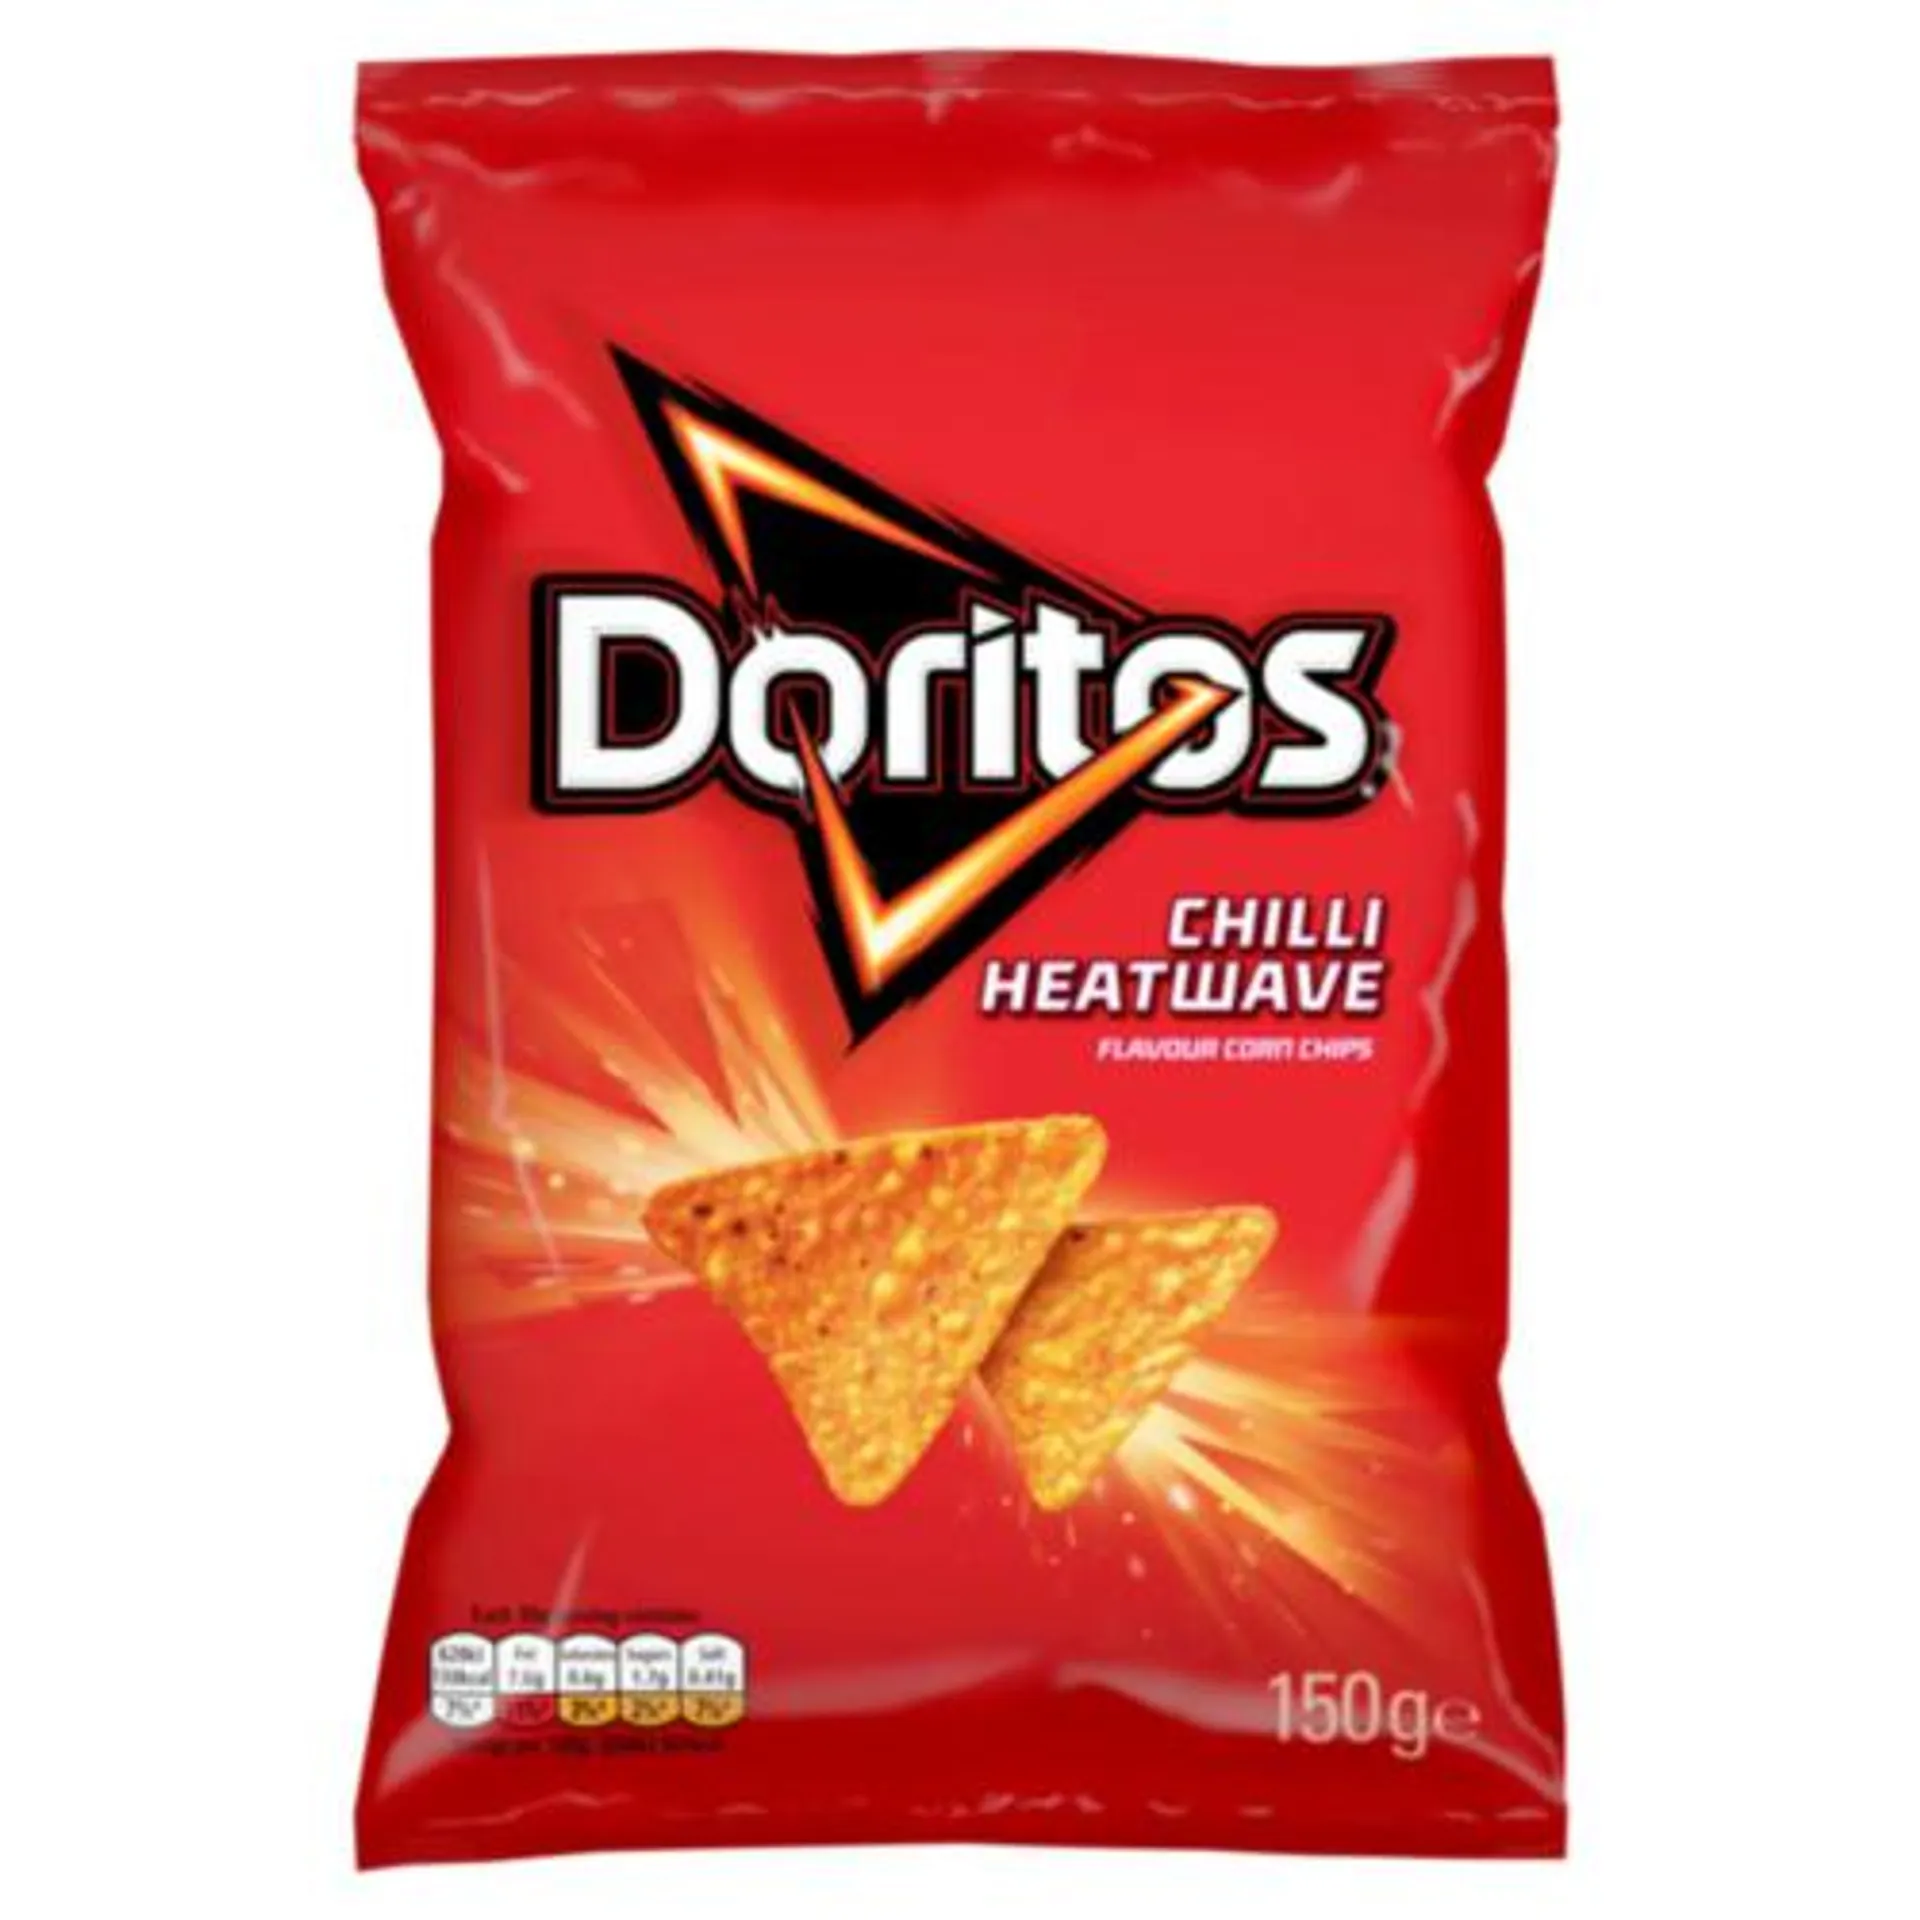 Doritos Chilli Heatwave Crisps Bag